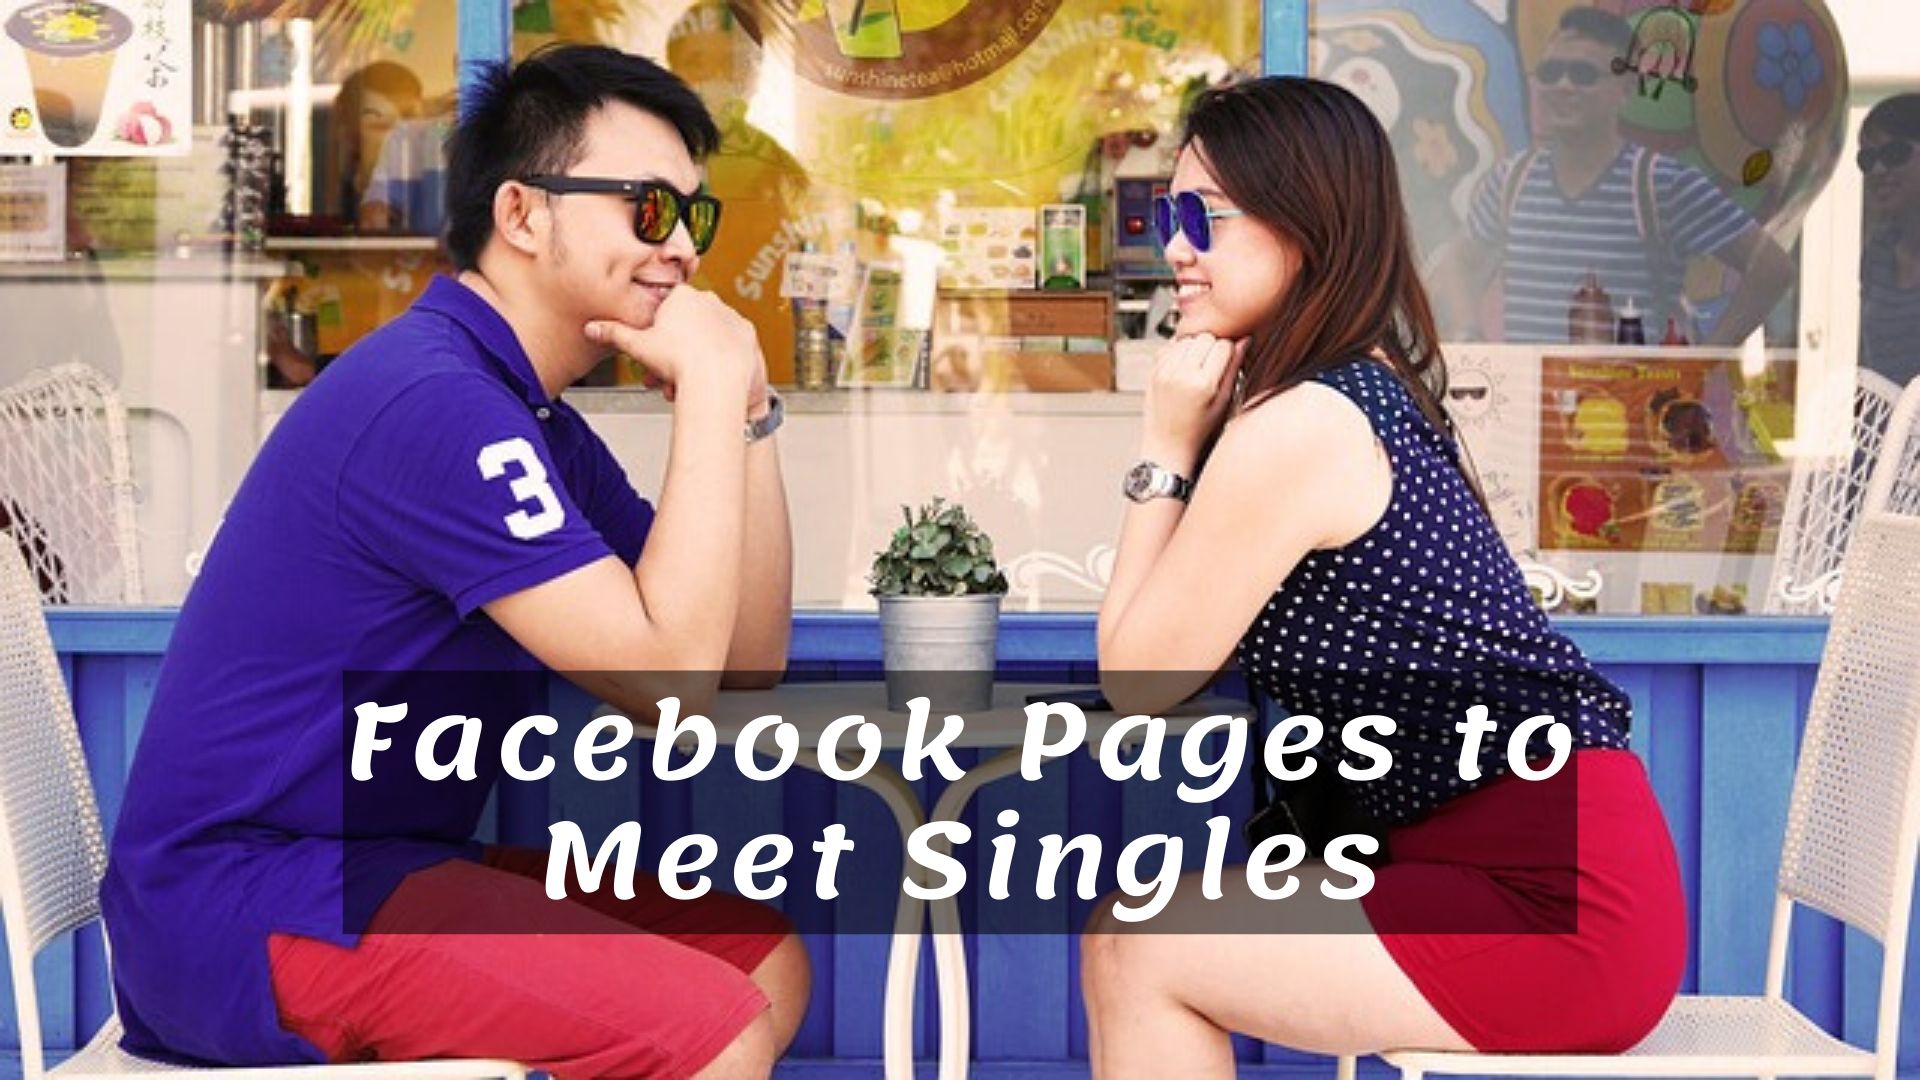 Find singles near me on facebook